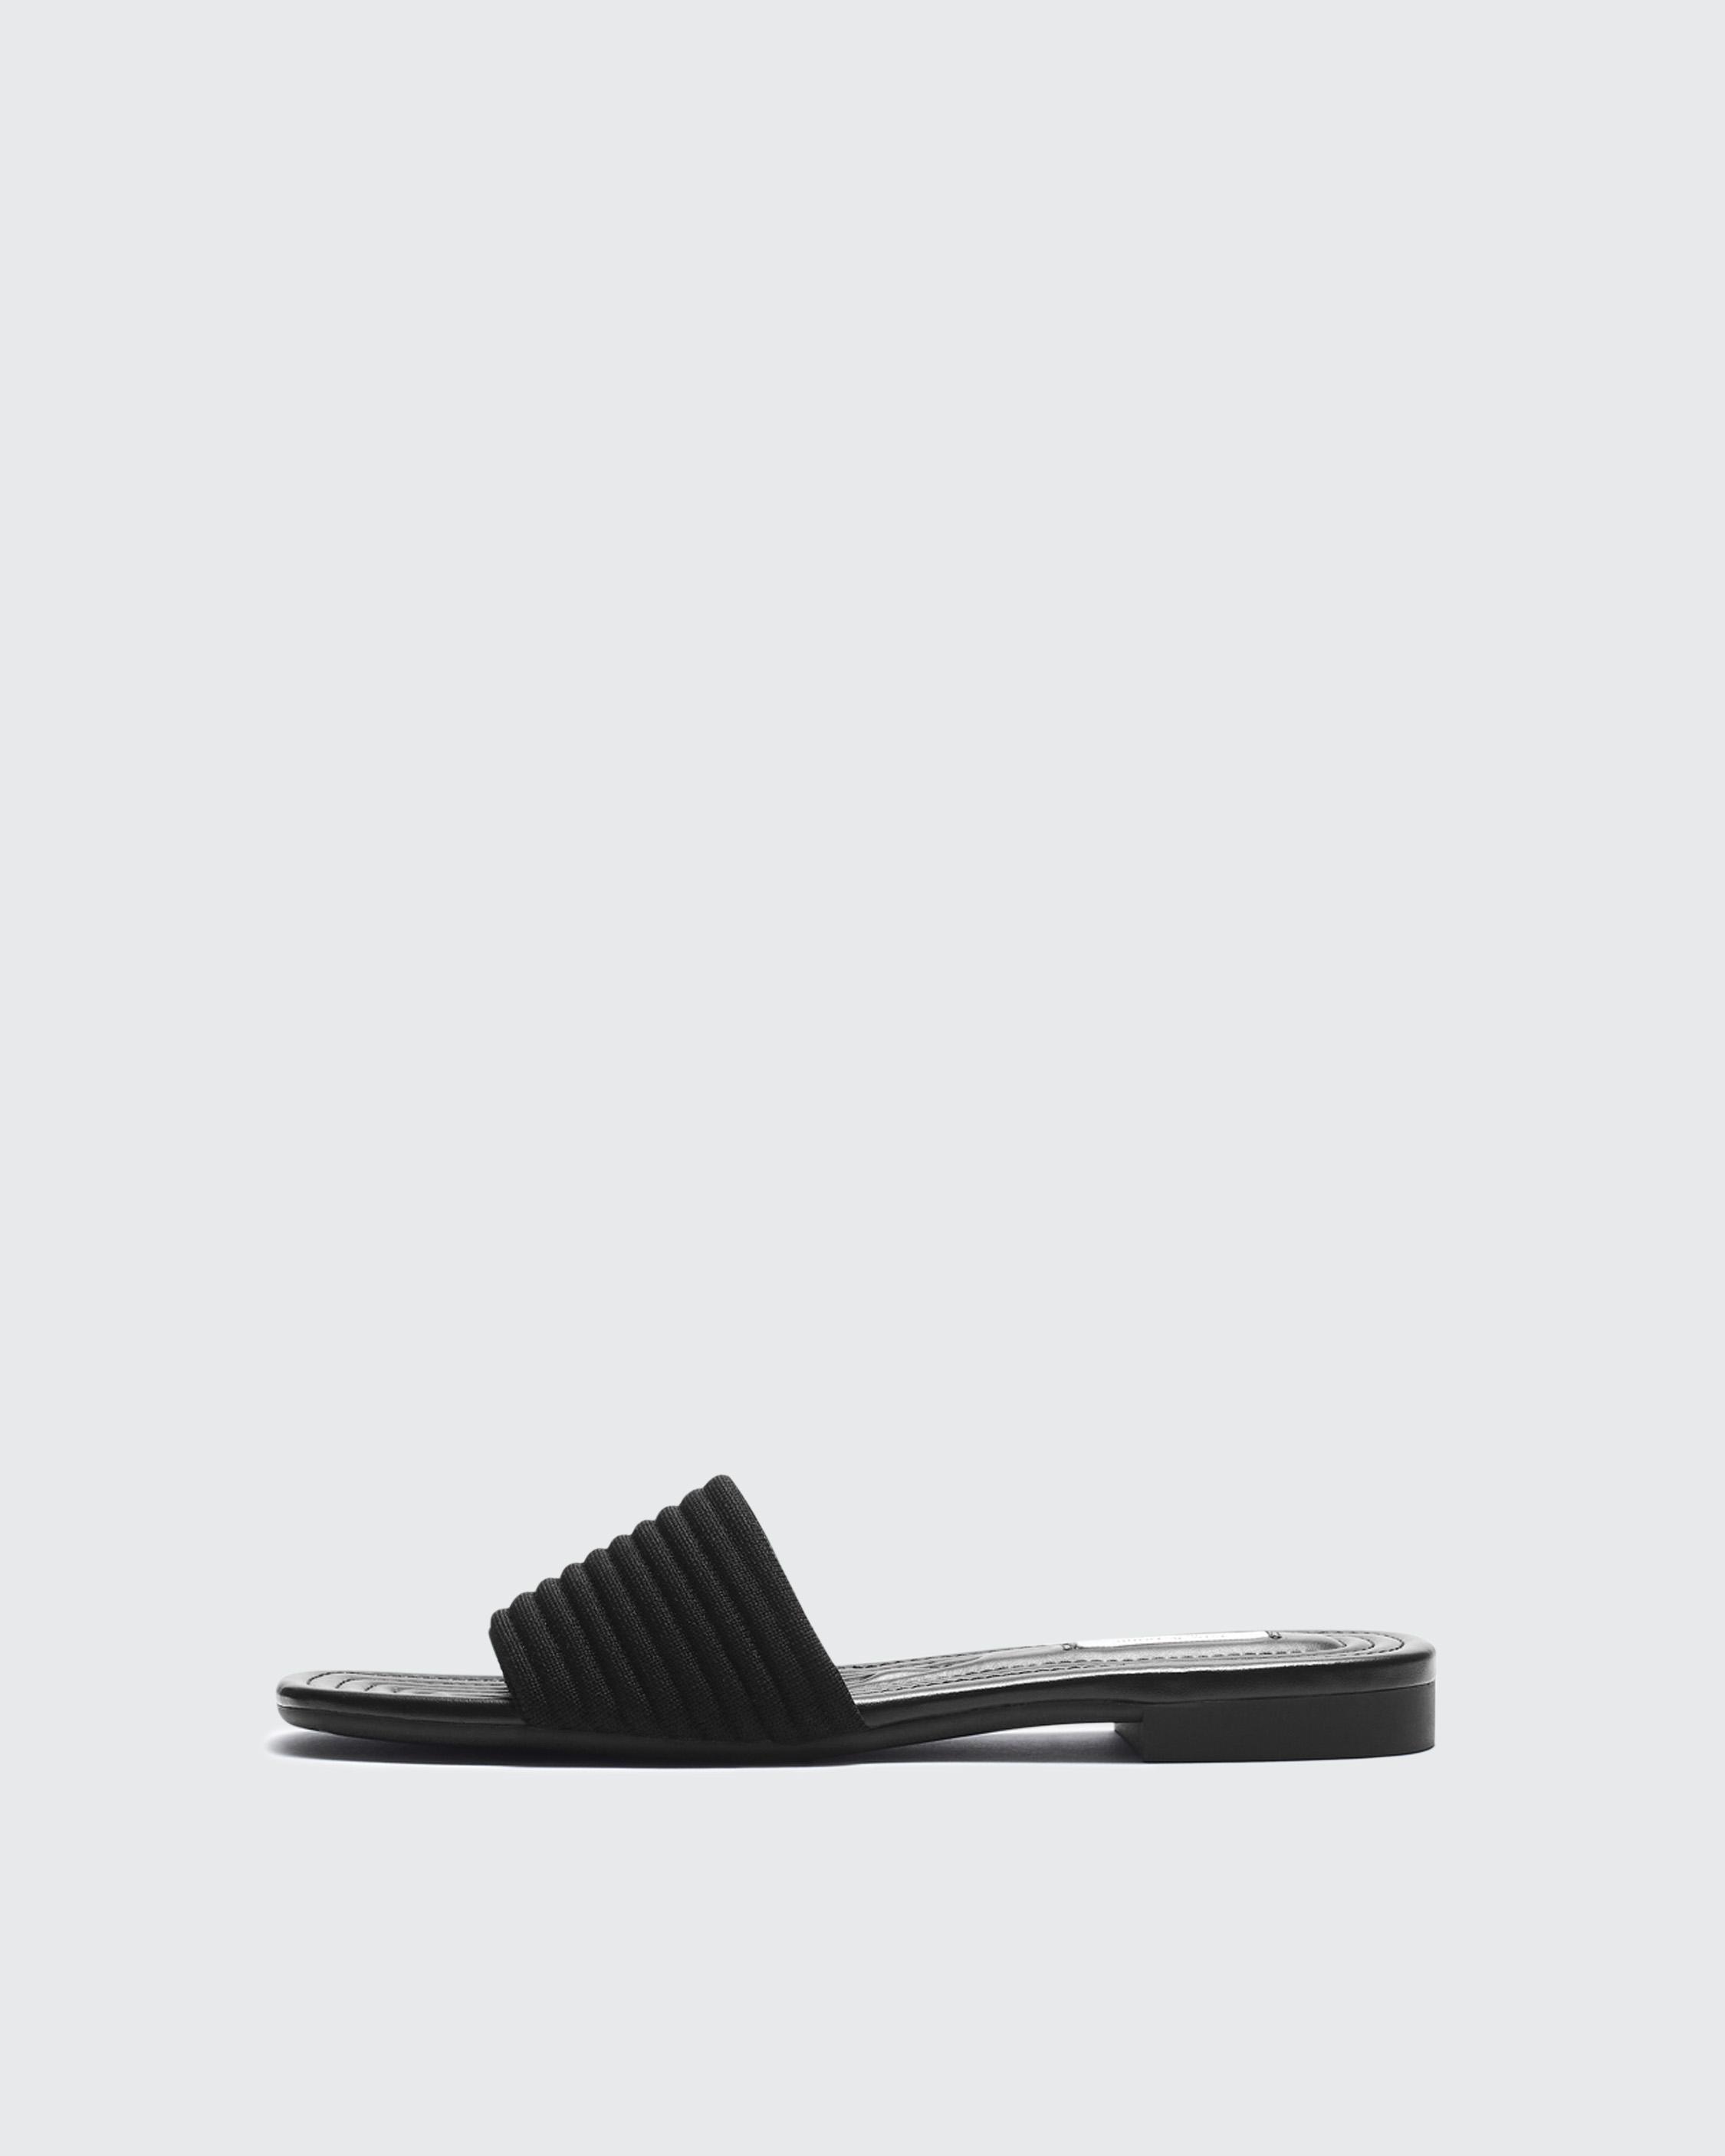 NEW Rag and Bone & Flip Flops Black Parker Thong Sandals Slippers 37 US 7  $195